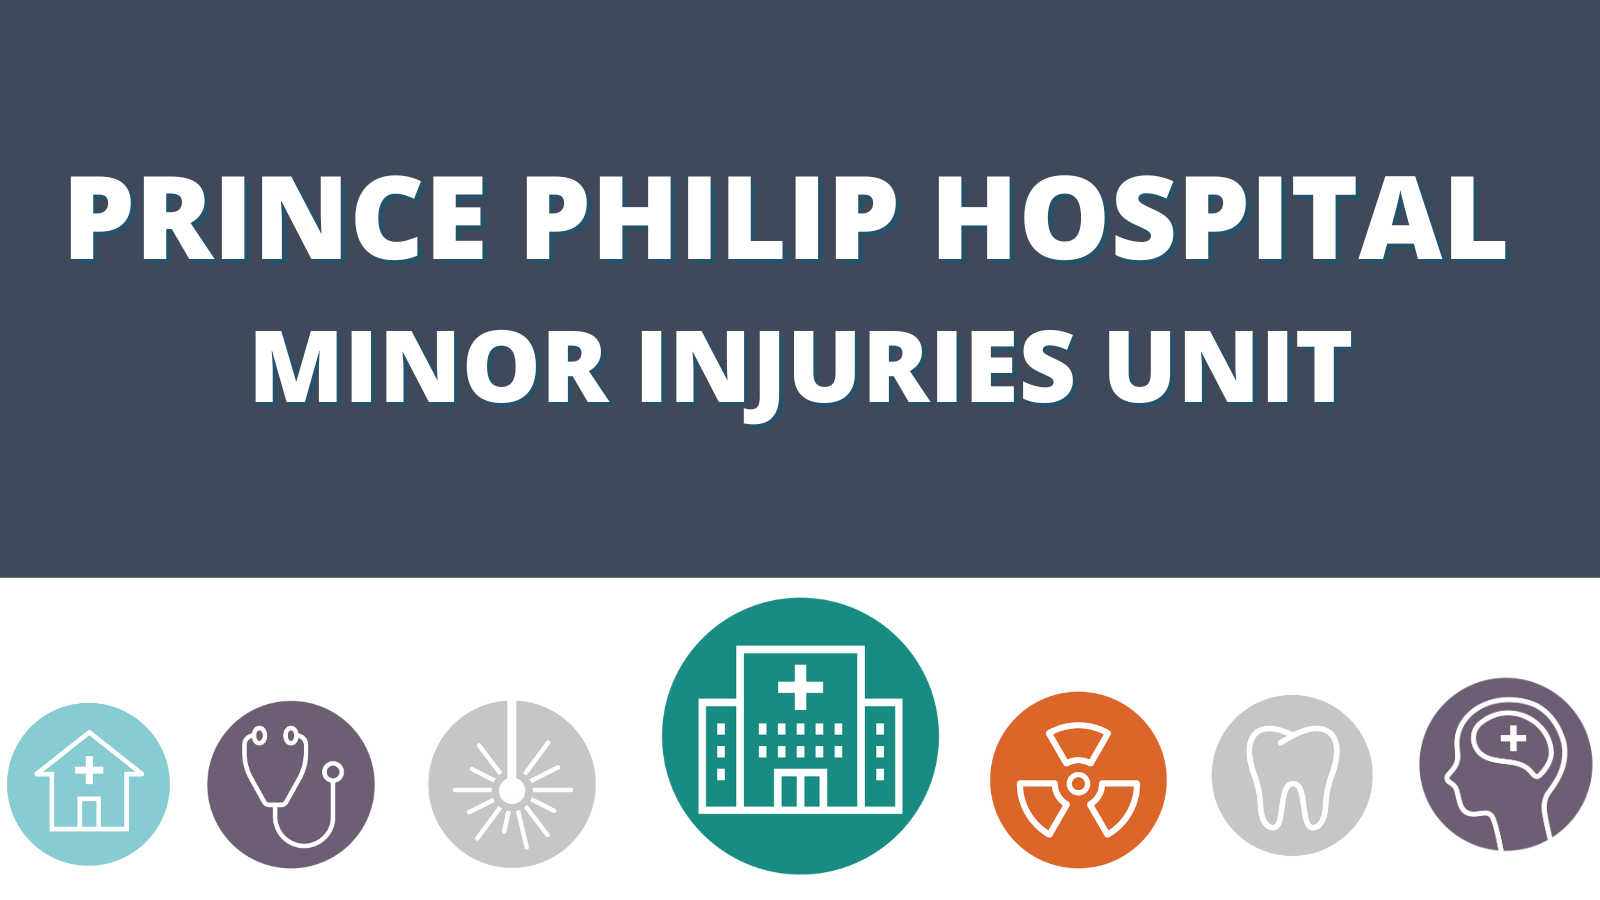 Prince Philip Hospital - Minor Injuries unit